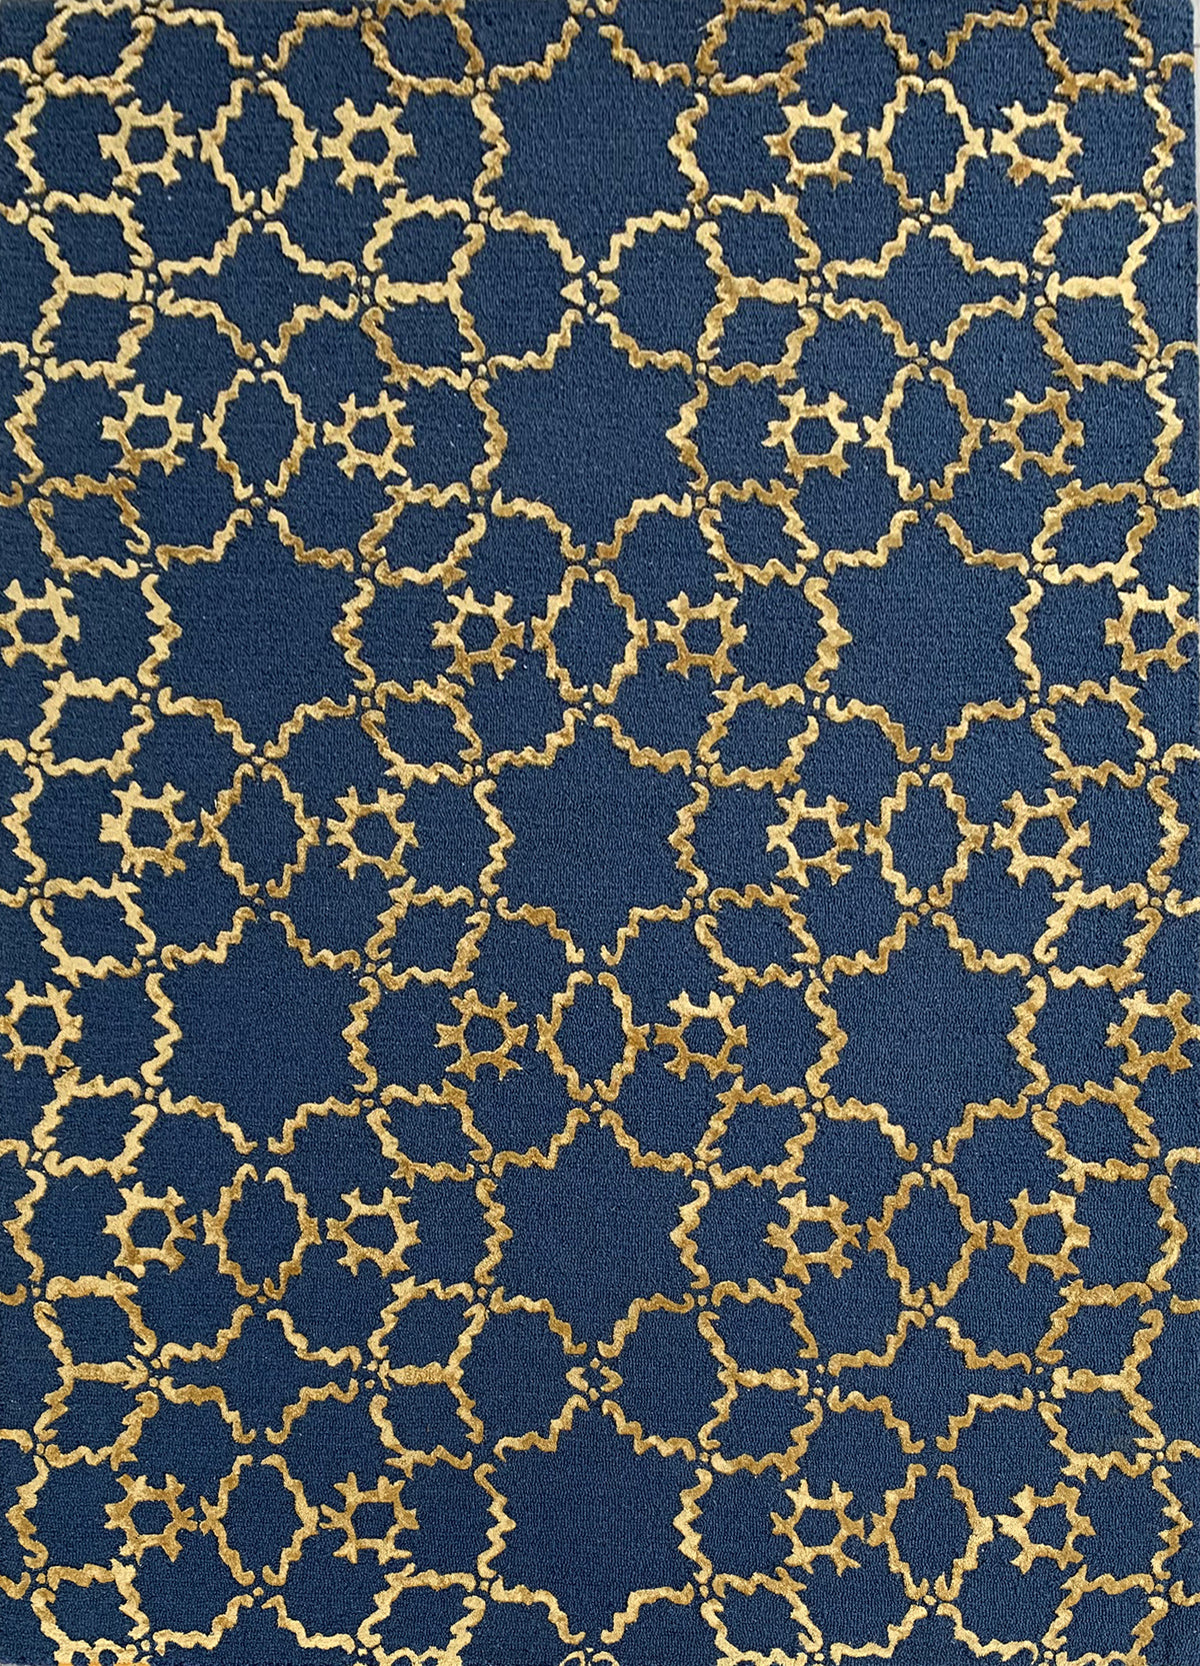 Rugslane Blue & Gold Color Modern Design High Quality Wool & Viscose Handmade Carpet 5ft X 7ft